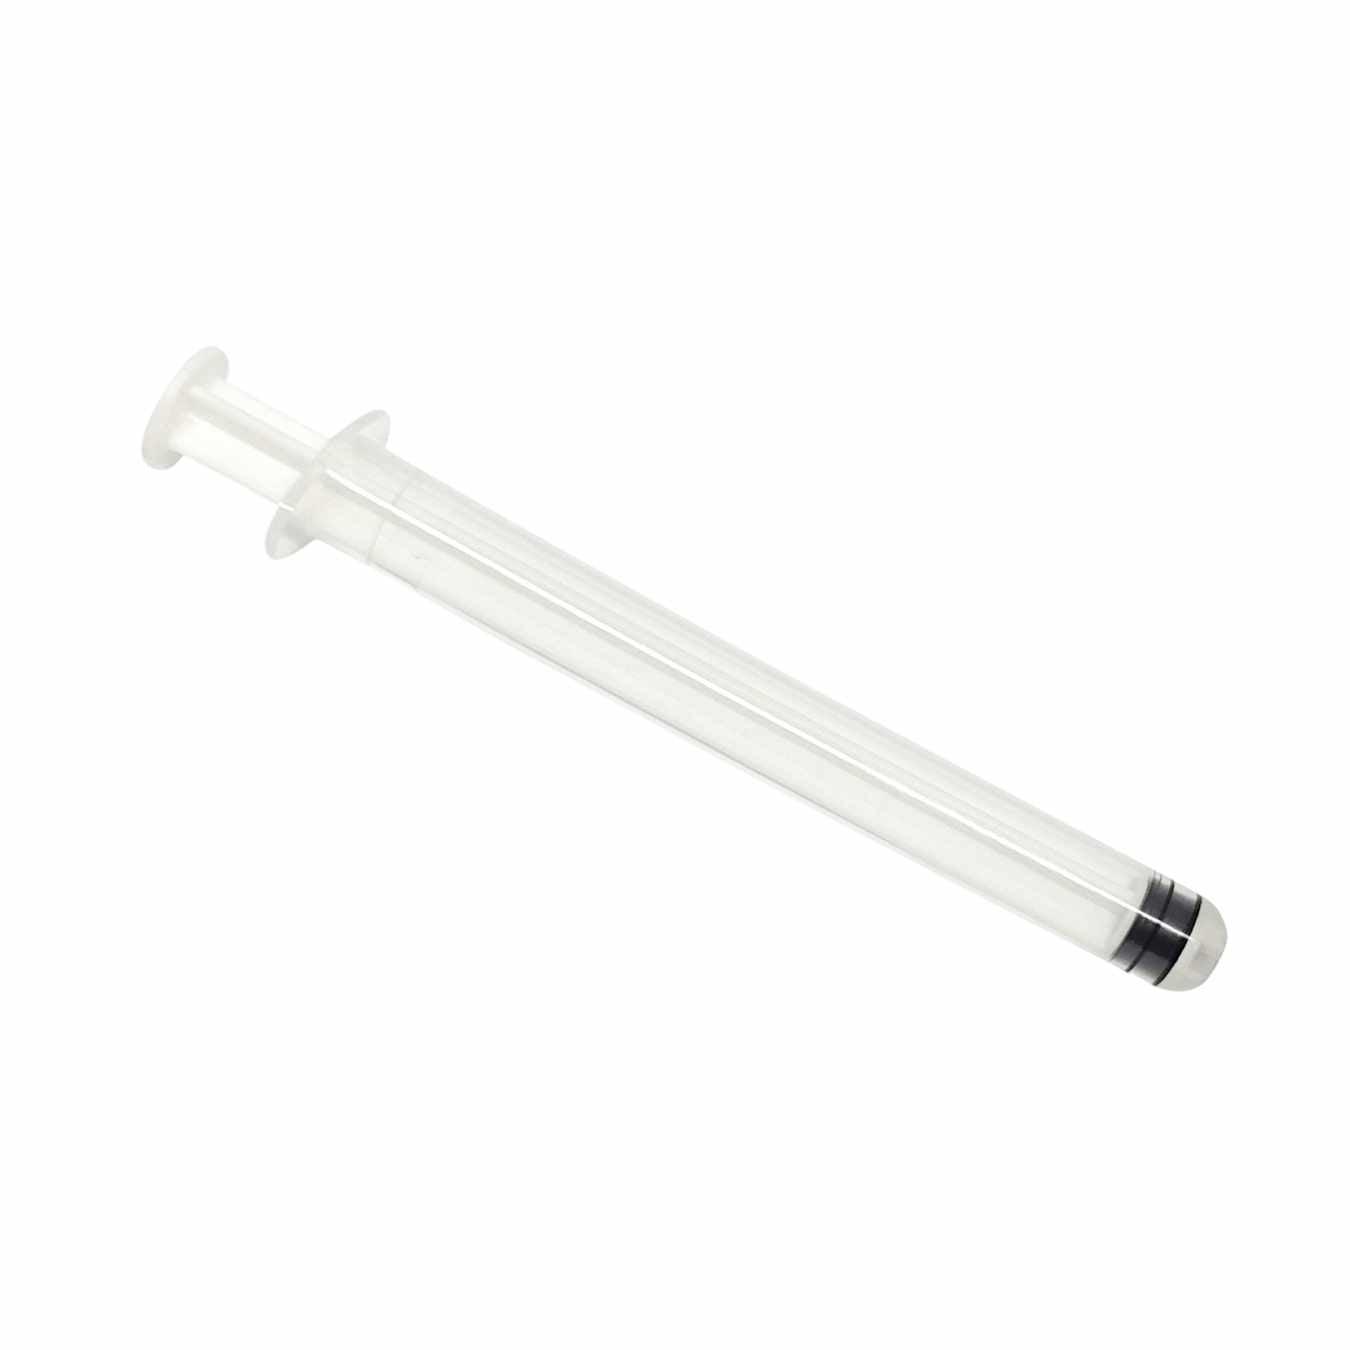 syringe for injecting sperm into vagina, sperm syringe, sperm applicator